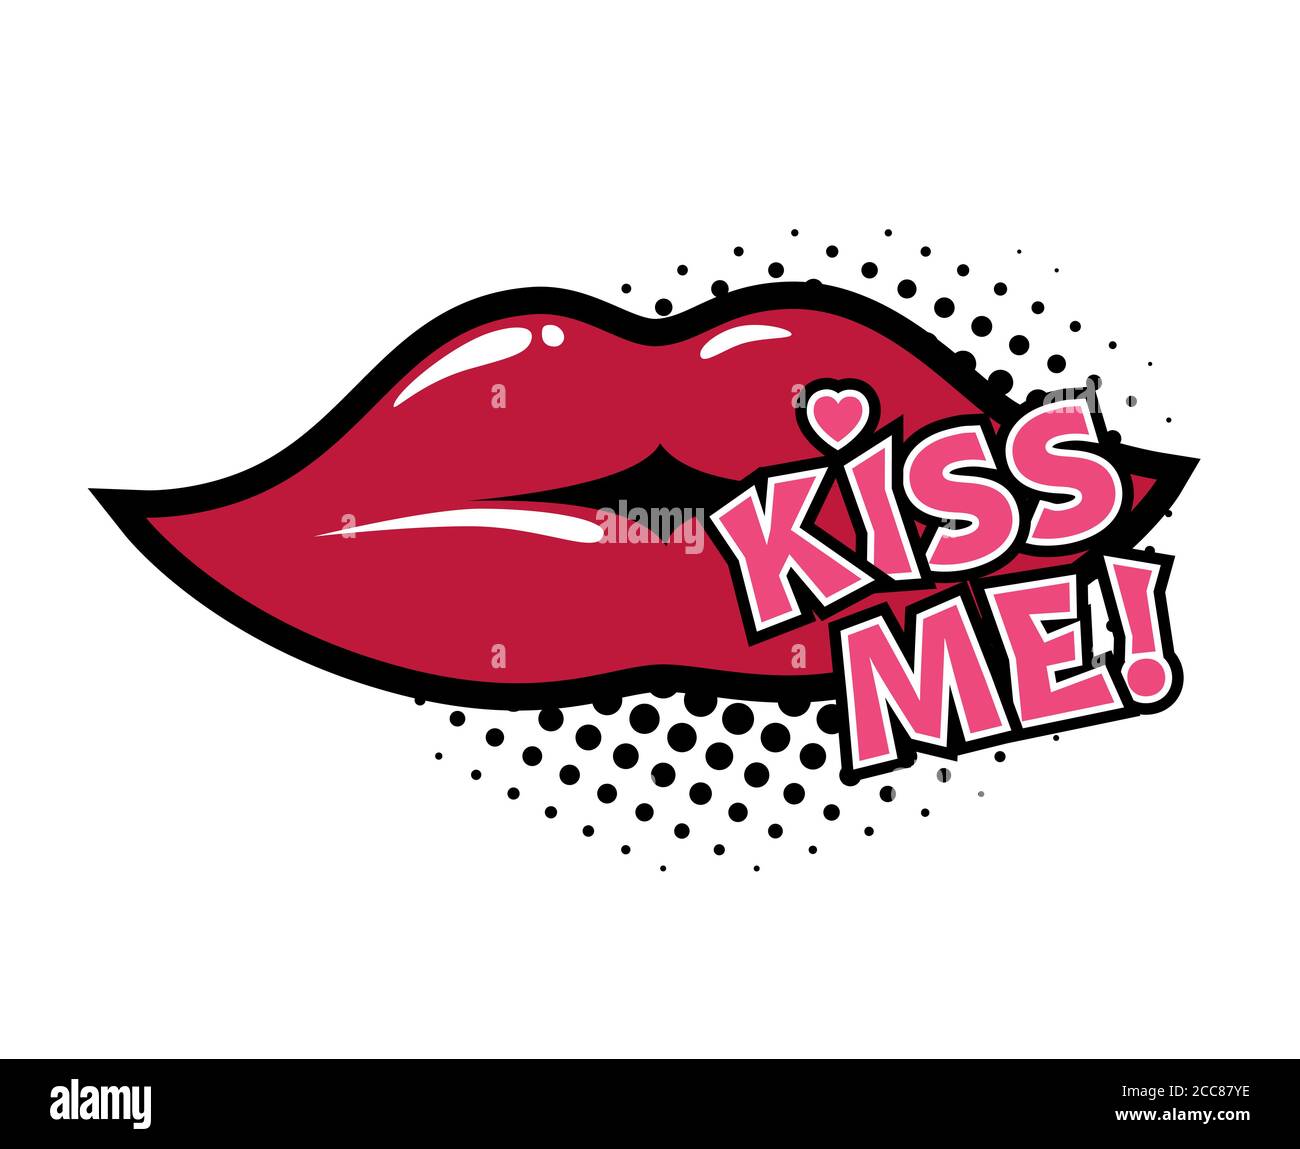 Letras cómicas Kiss Me. Voz cómica burbuja con texto emocional